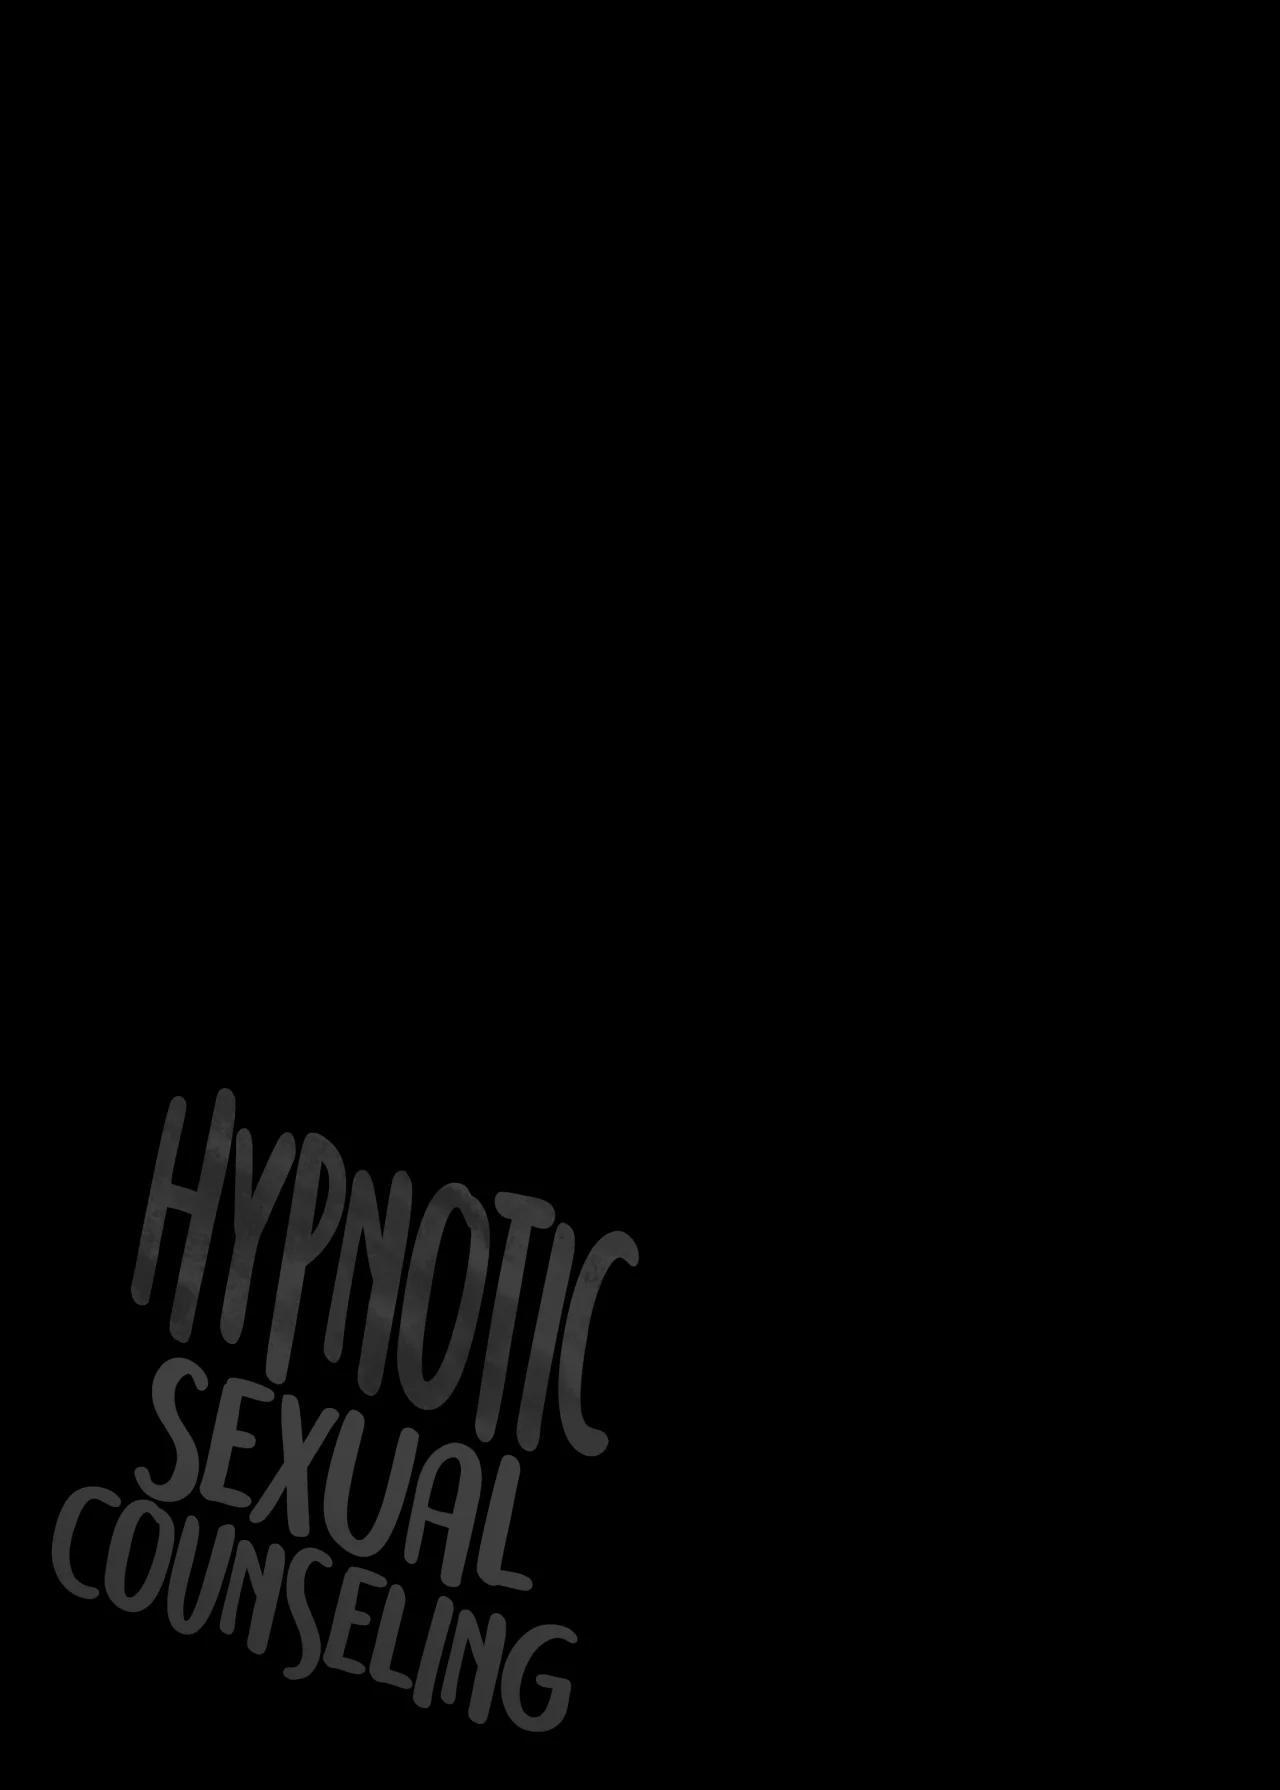 Hypnotic Sexual Counseling - Caso de Reika Kurashiki (Sin Censura) - 1